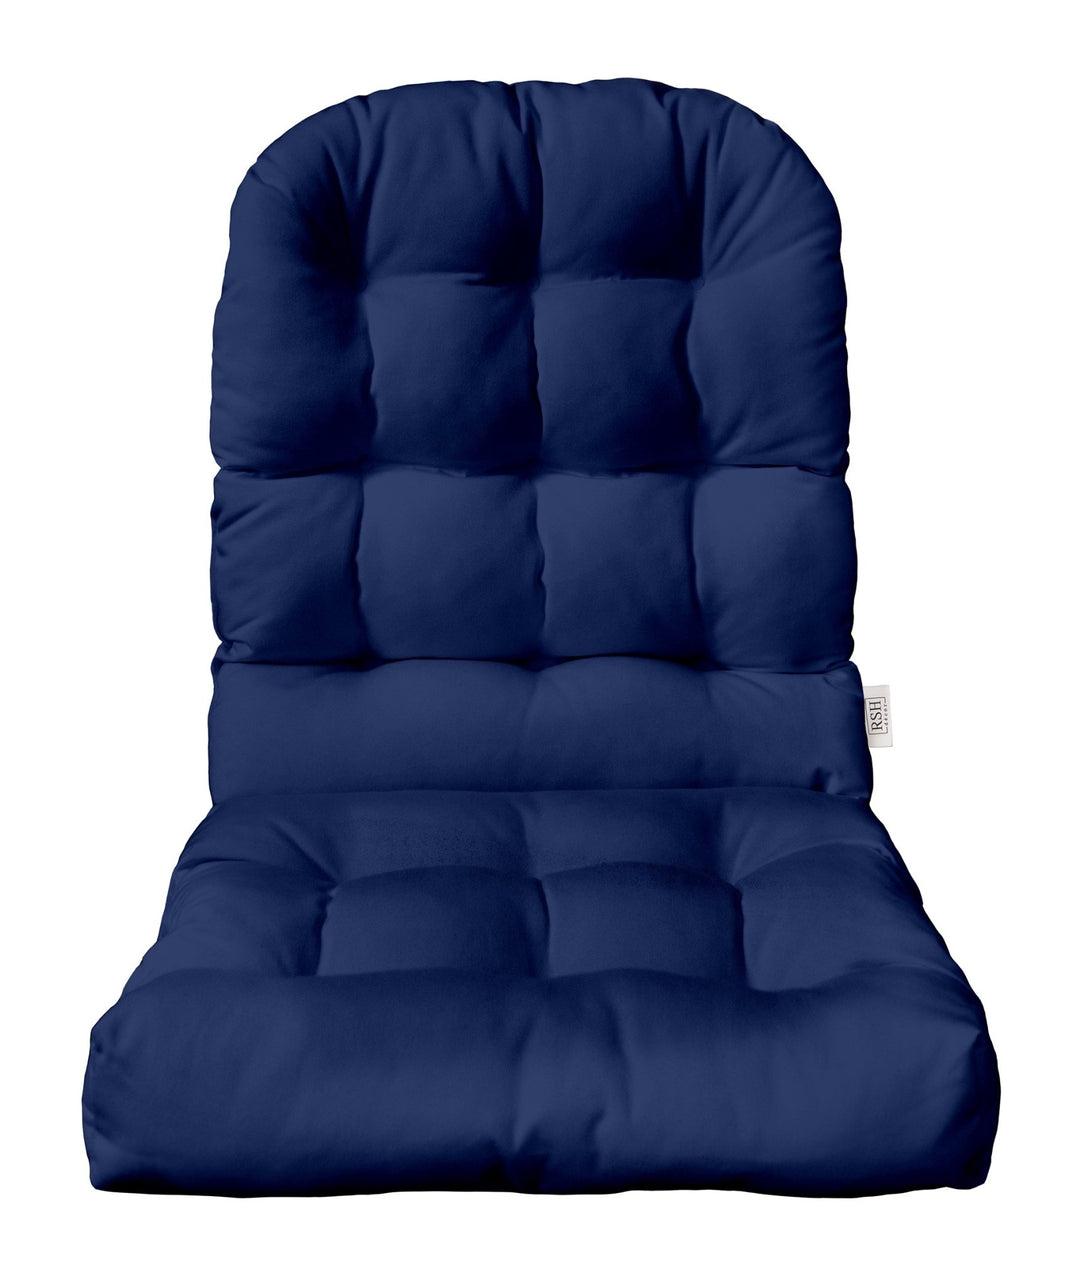 Adirondack Cushion, Tufted, 42.5" H x 21" W, Navy Blue - RSH Decor